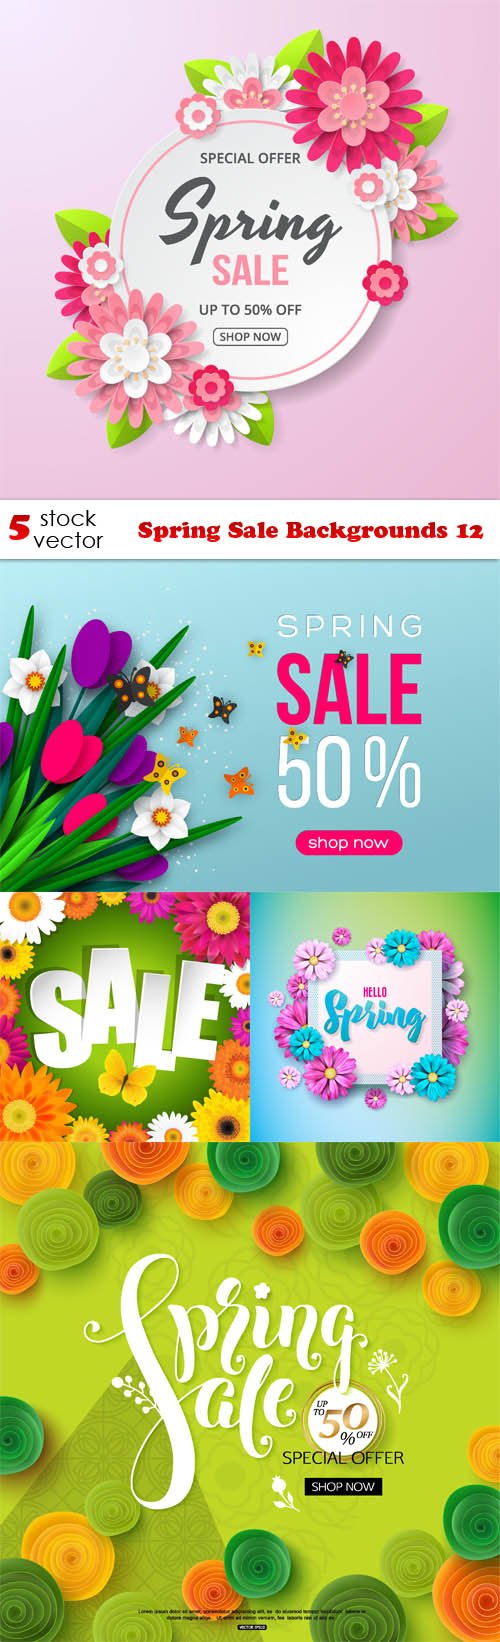 Vectors - Spring Sale Backgrounds 12